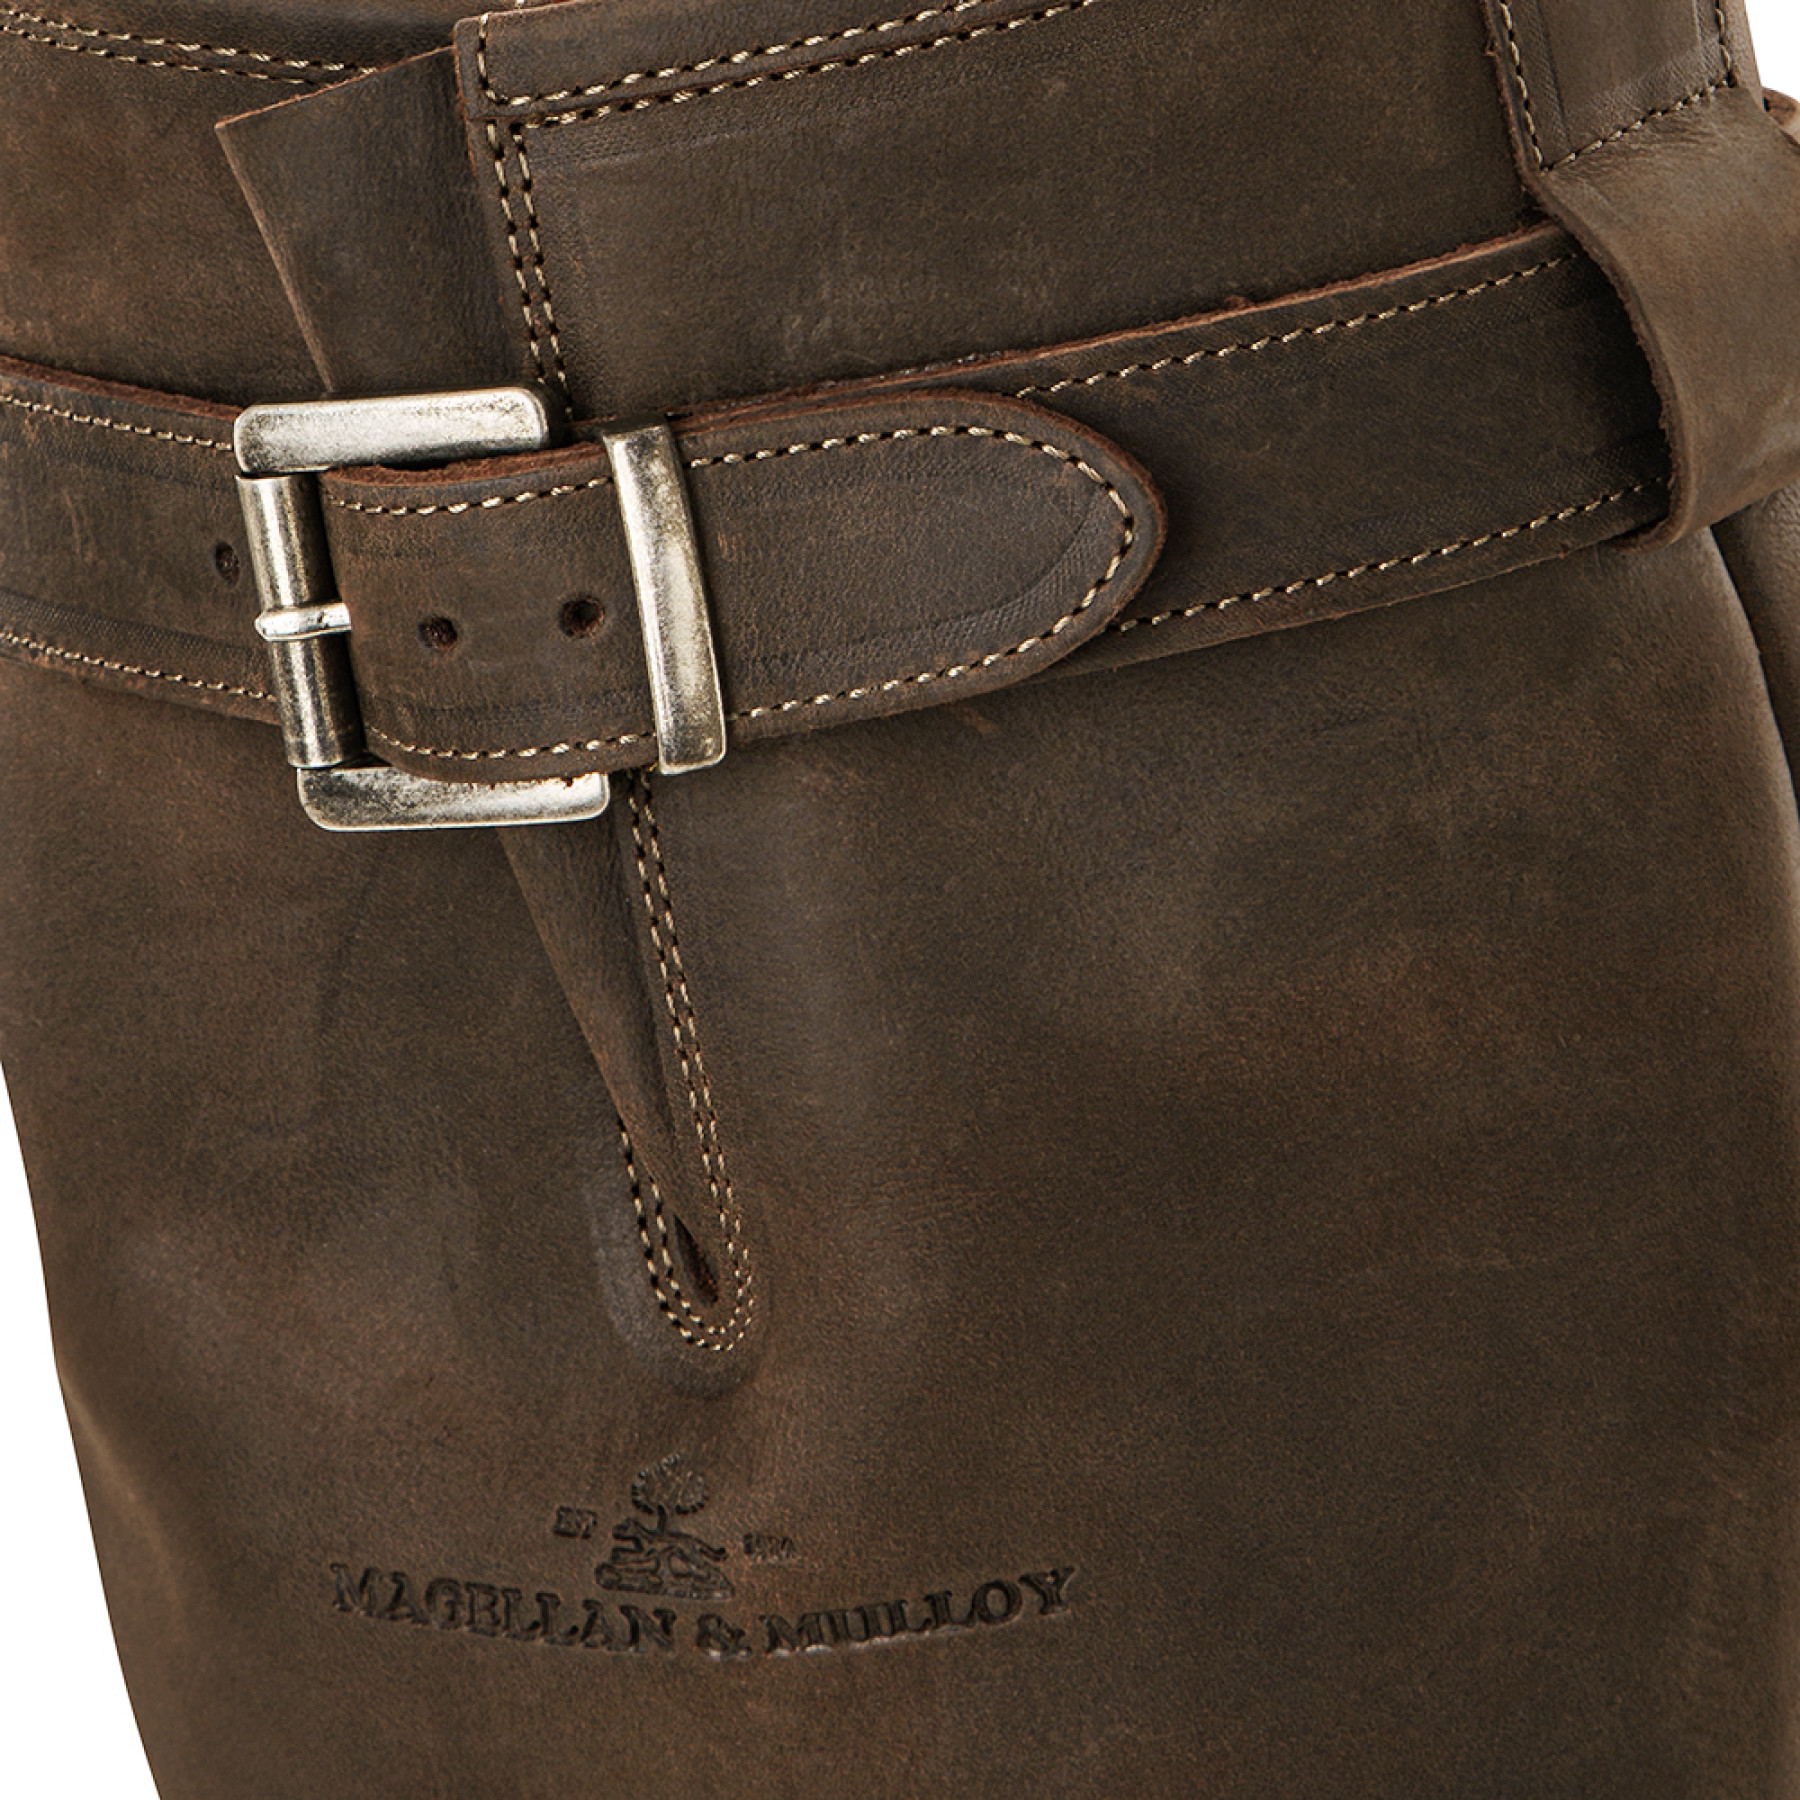 Magellan & Mulloy Xscape Denver Brown, brown ladies outdoor boot